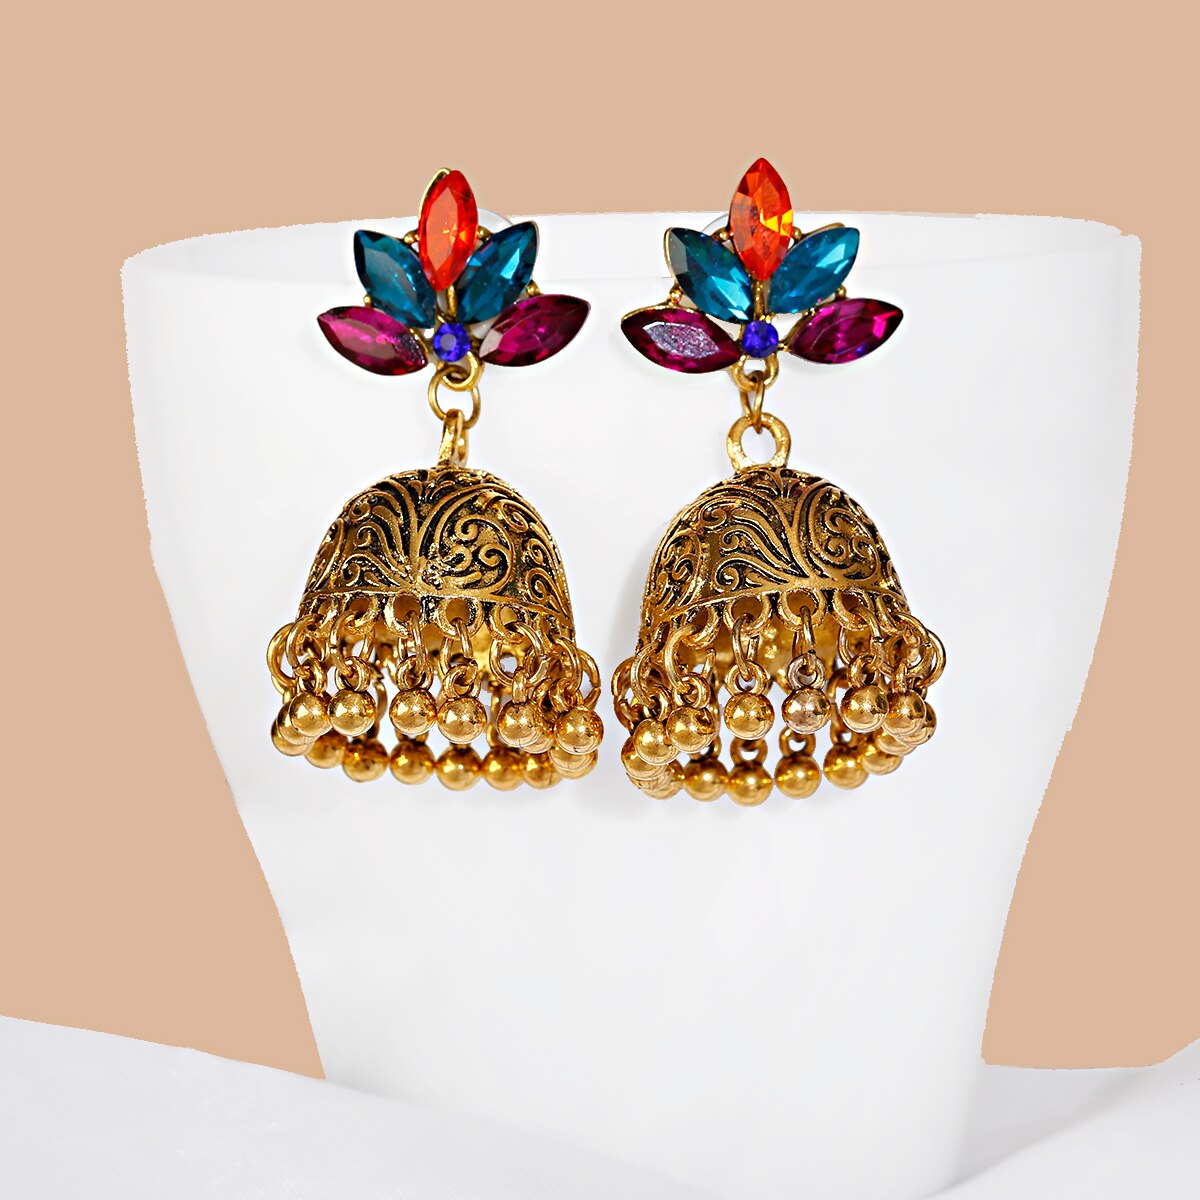 Luxury-Indian-Jhumka-Earrings-For-Women-Retro-Flower-Carved-CZ-Big-Bells-Tibetan-Earrings-Oorbellen-1005004770824397-4